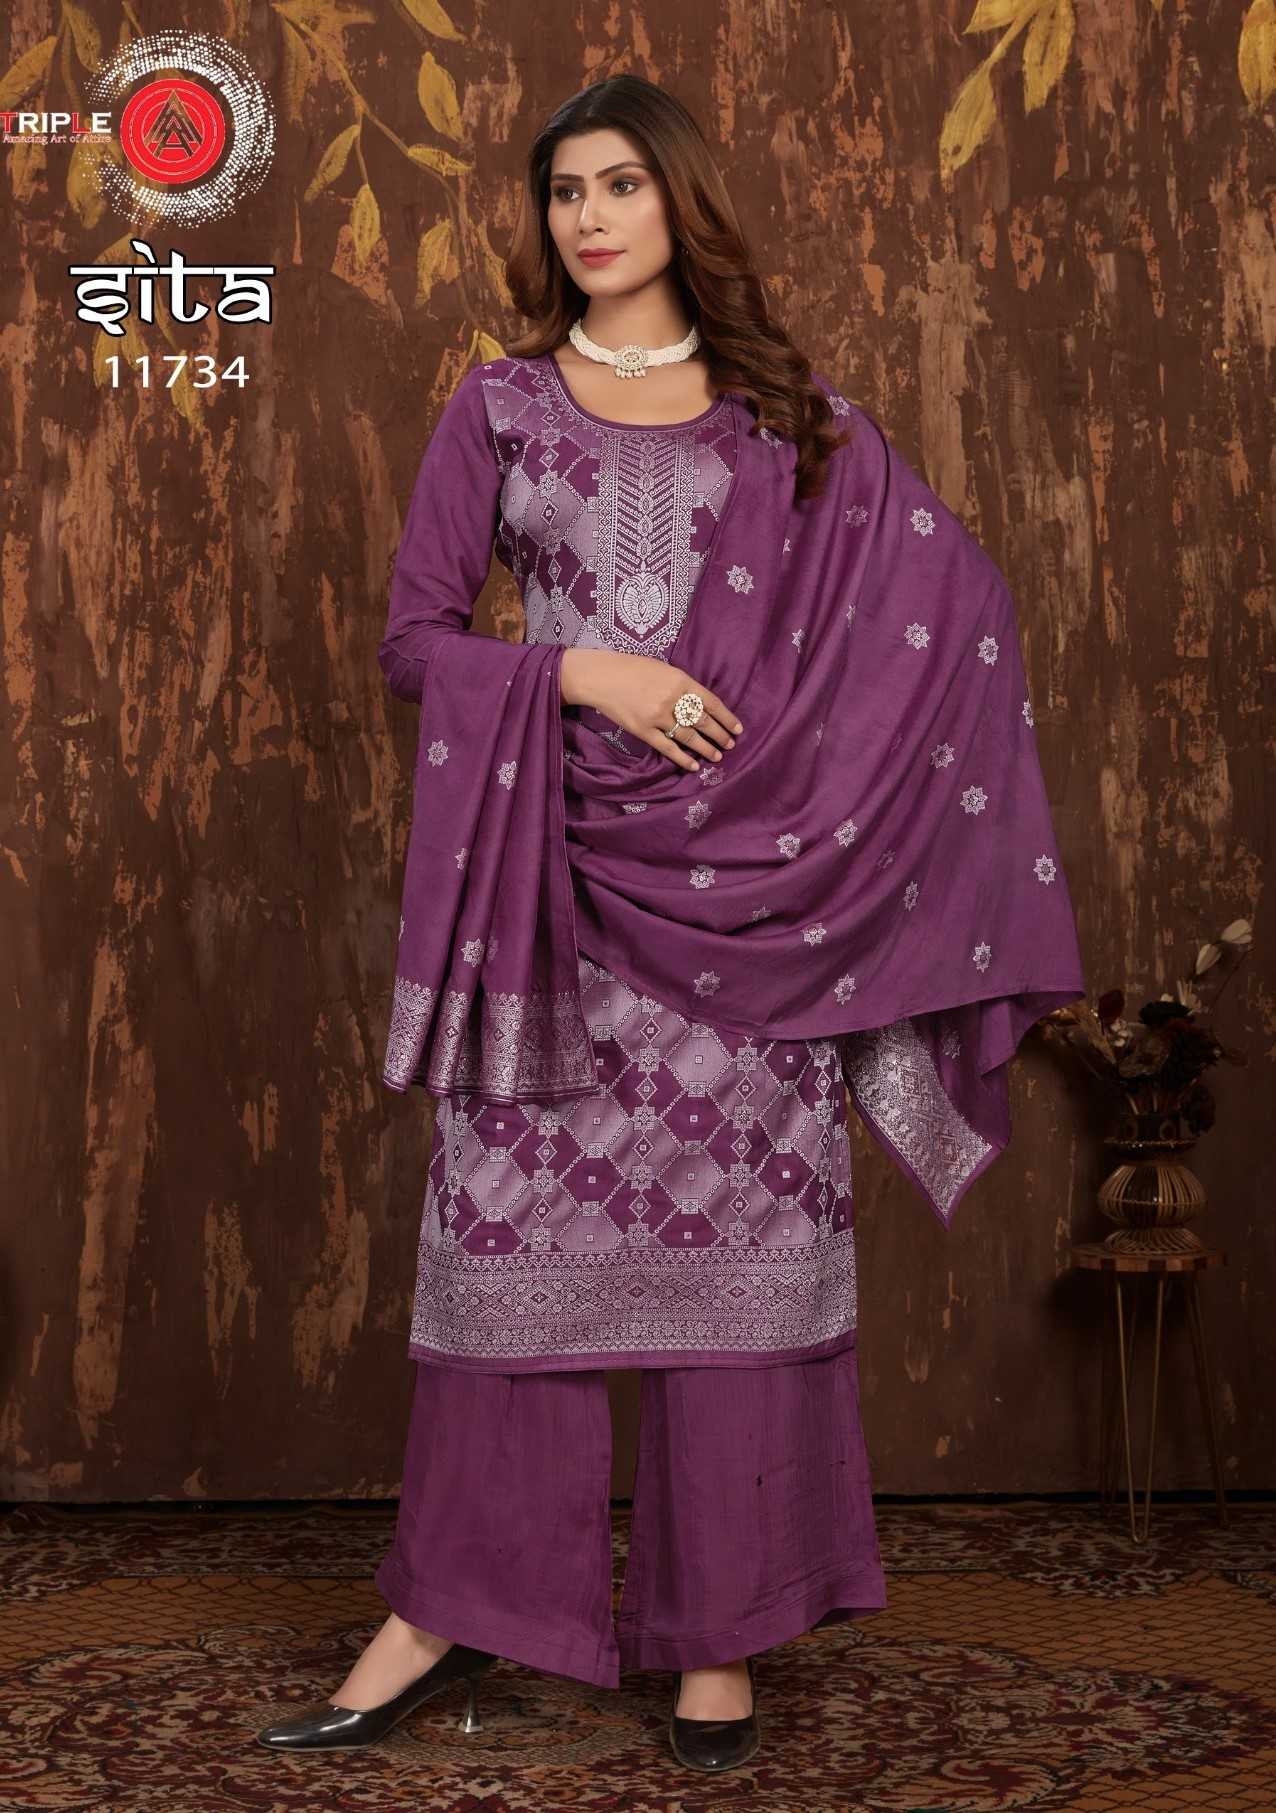 triple a sita muslin fashionable look lakhnavi jacquard top pant with dupatta 